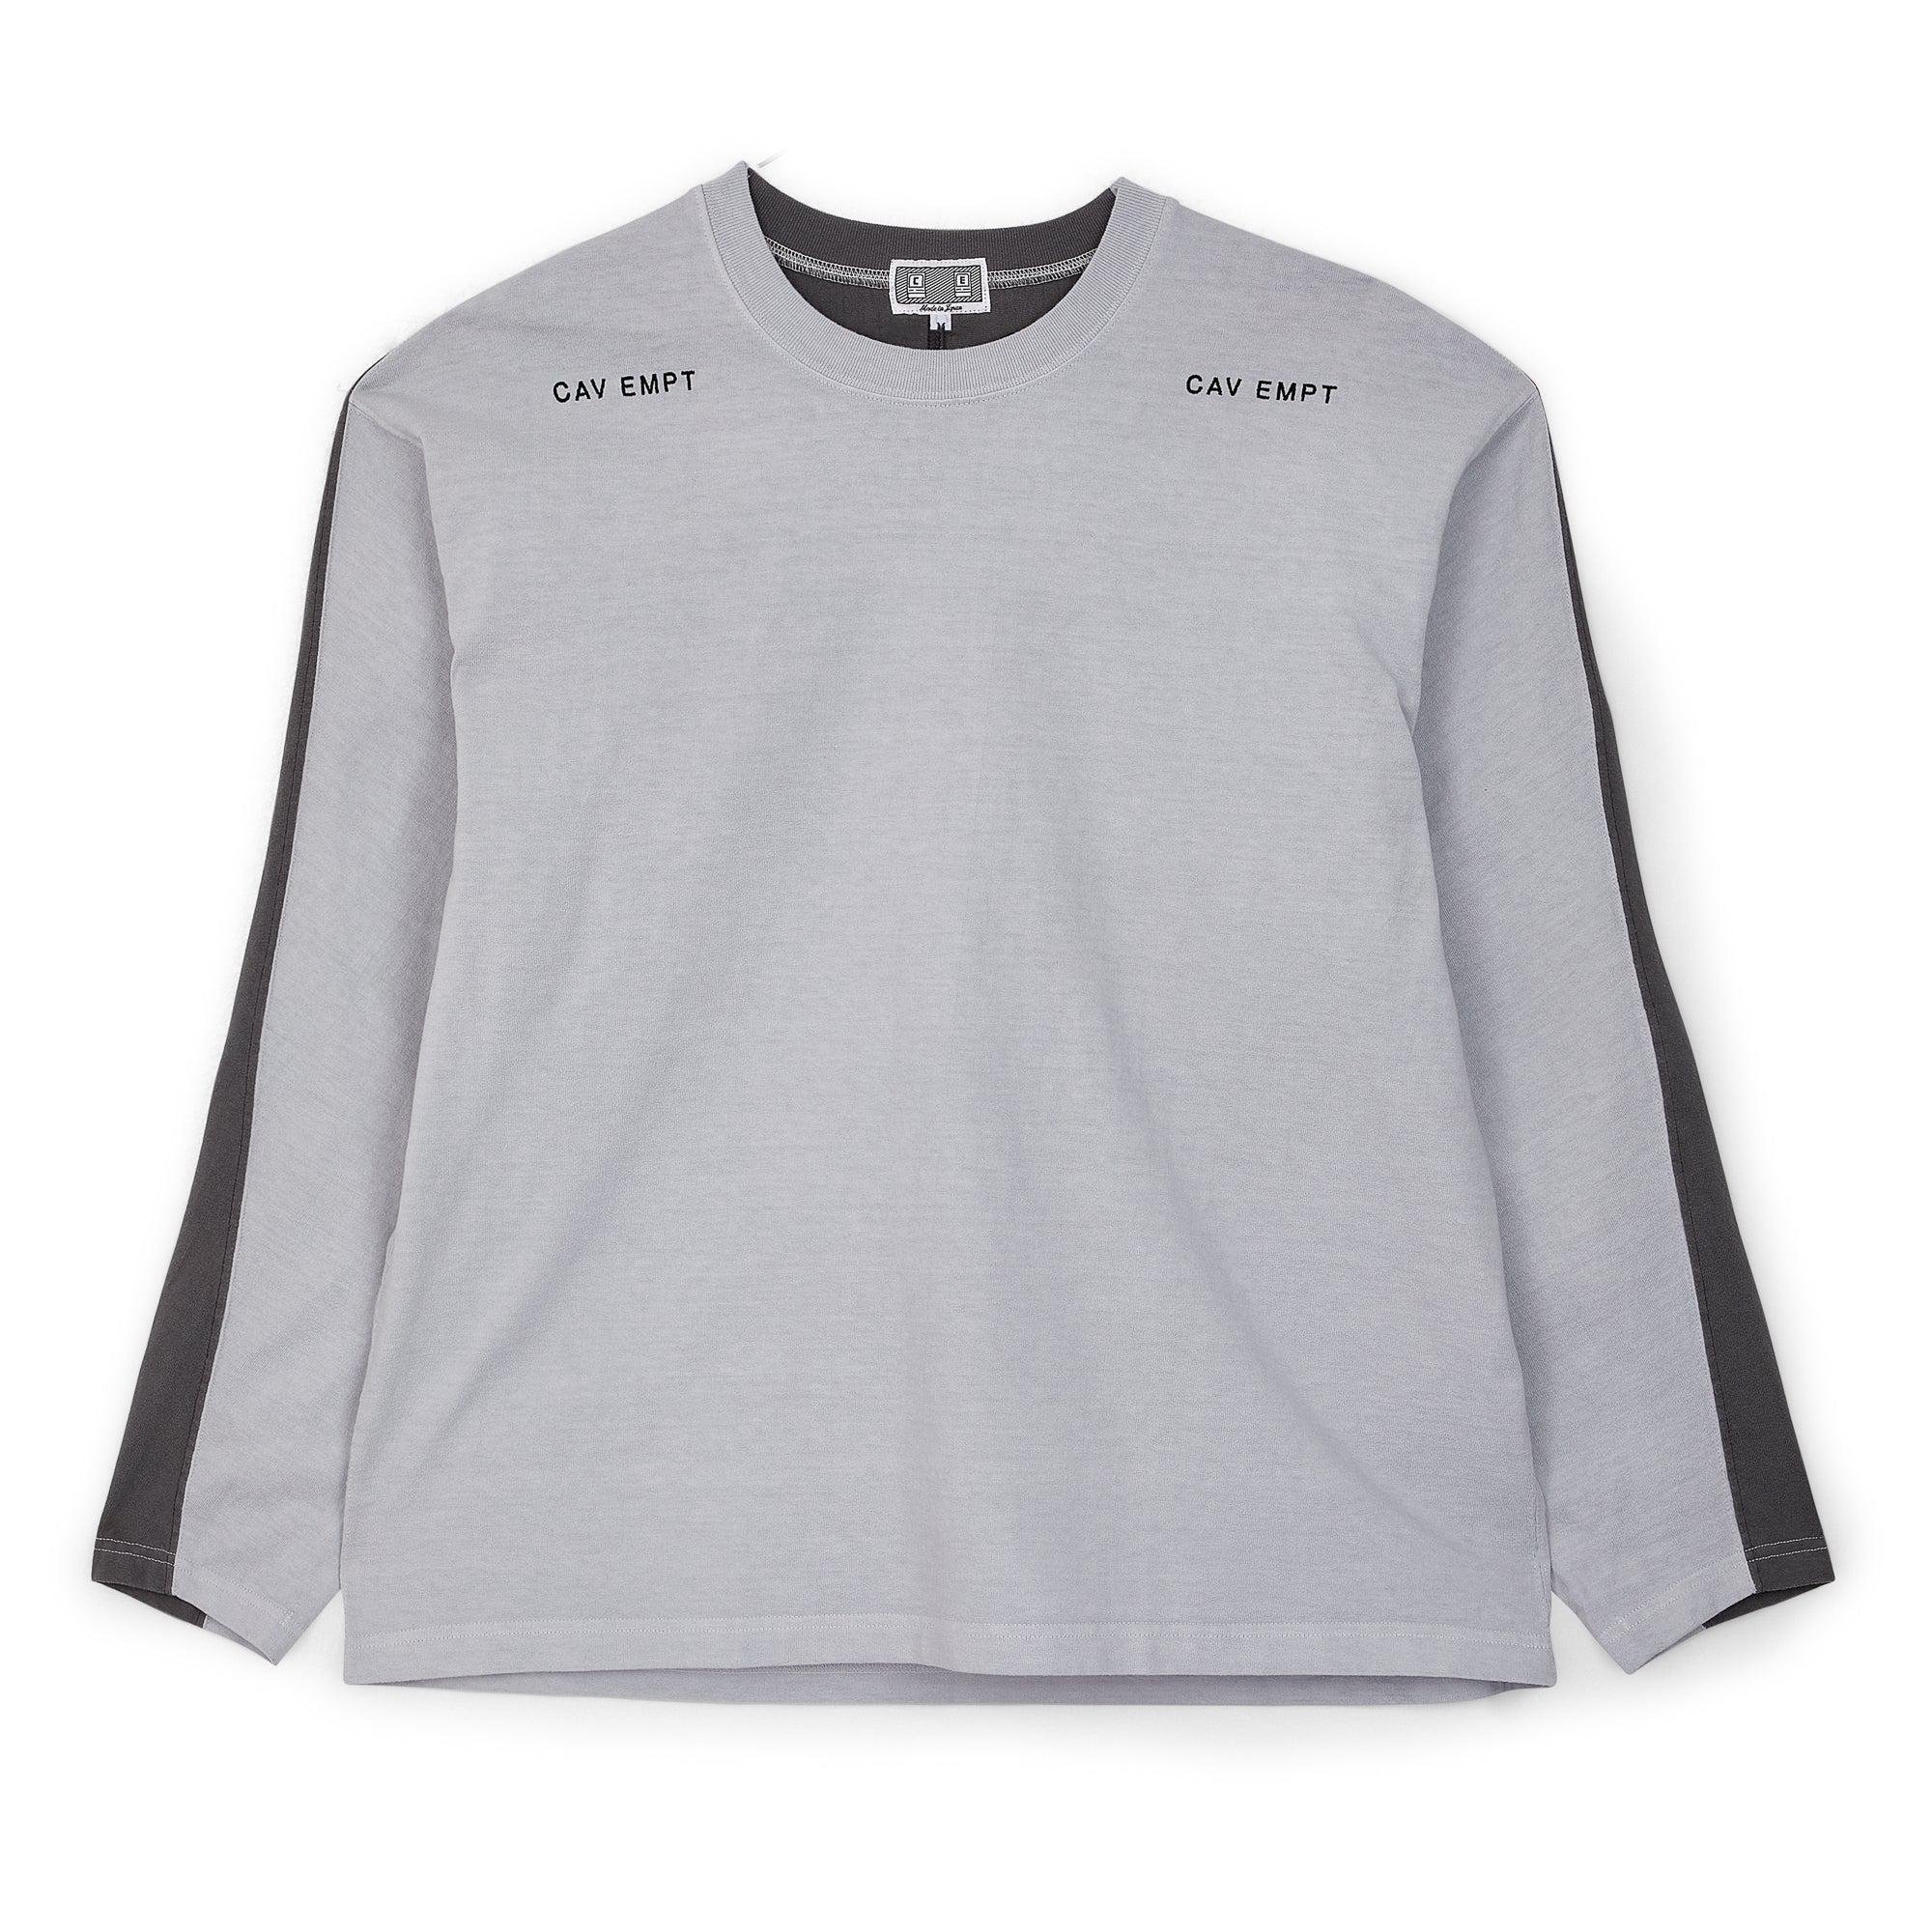 Cav Empt Overdyed Forward Line L/S T-Shirt (Grey) by CAV EMPT